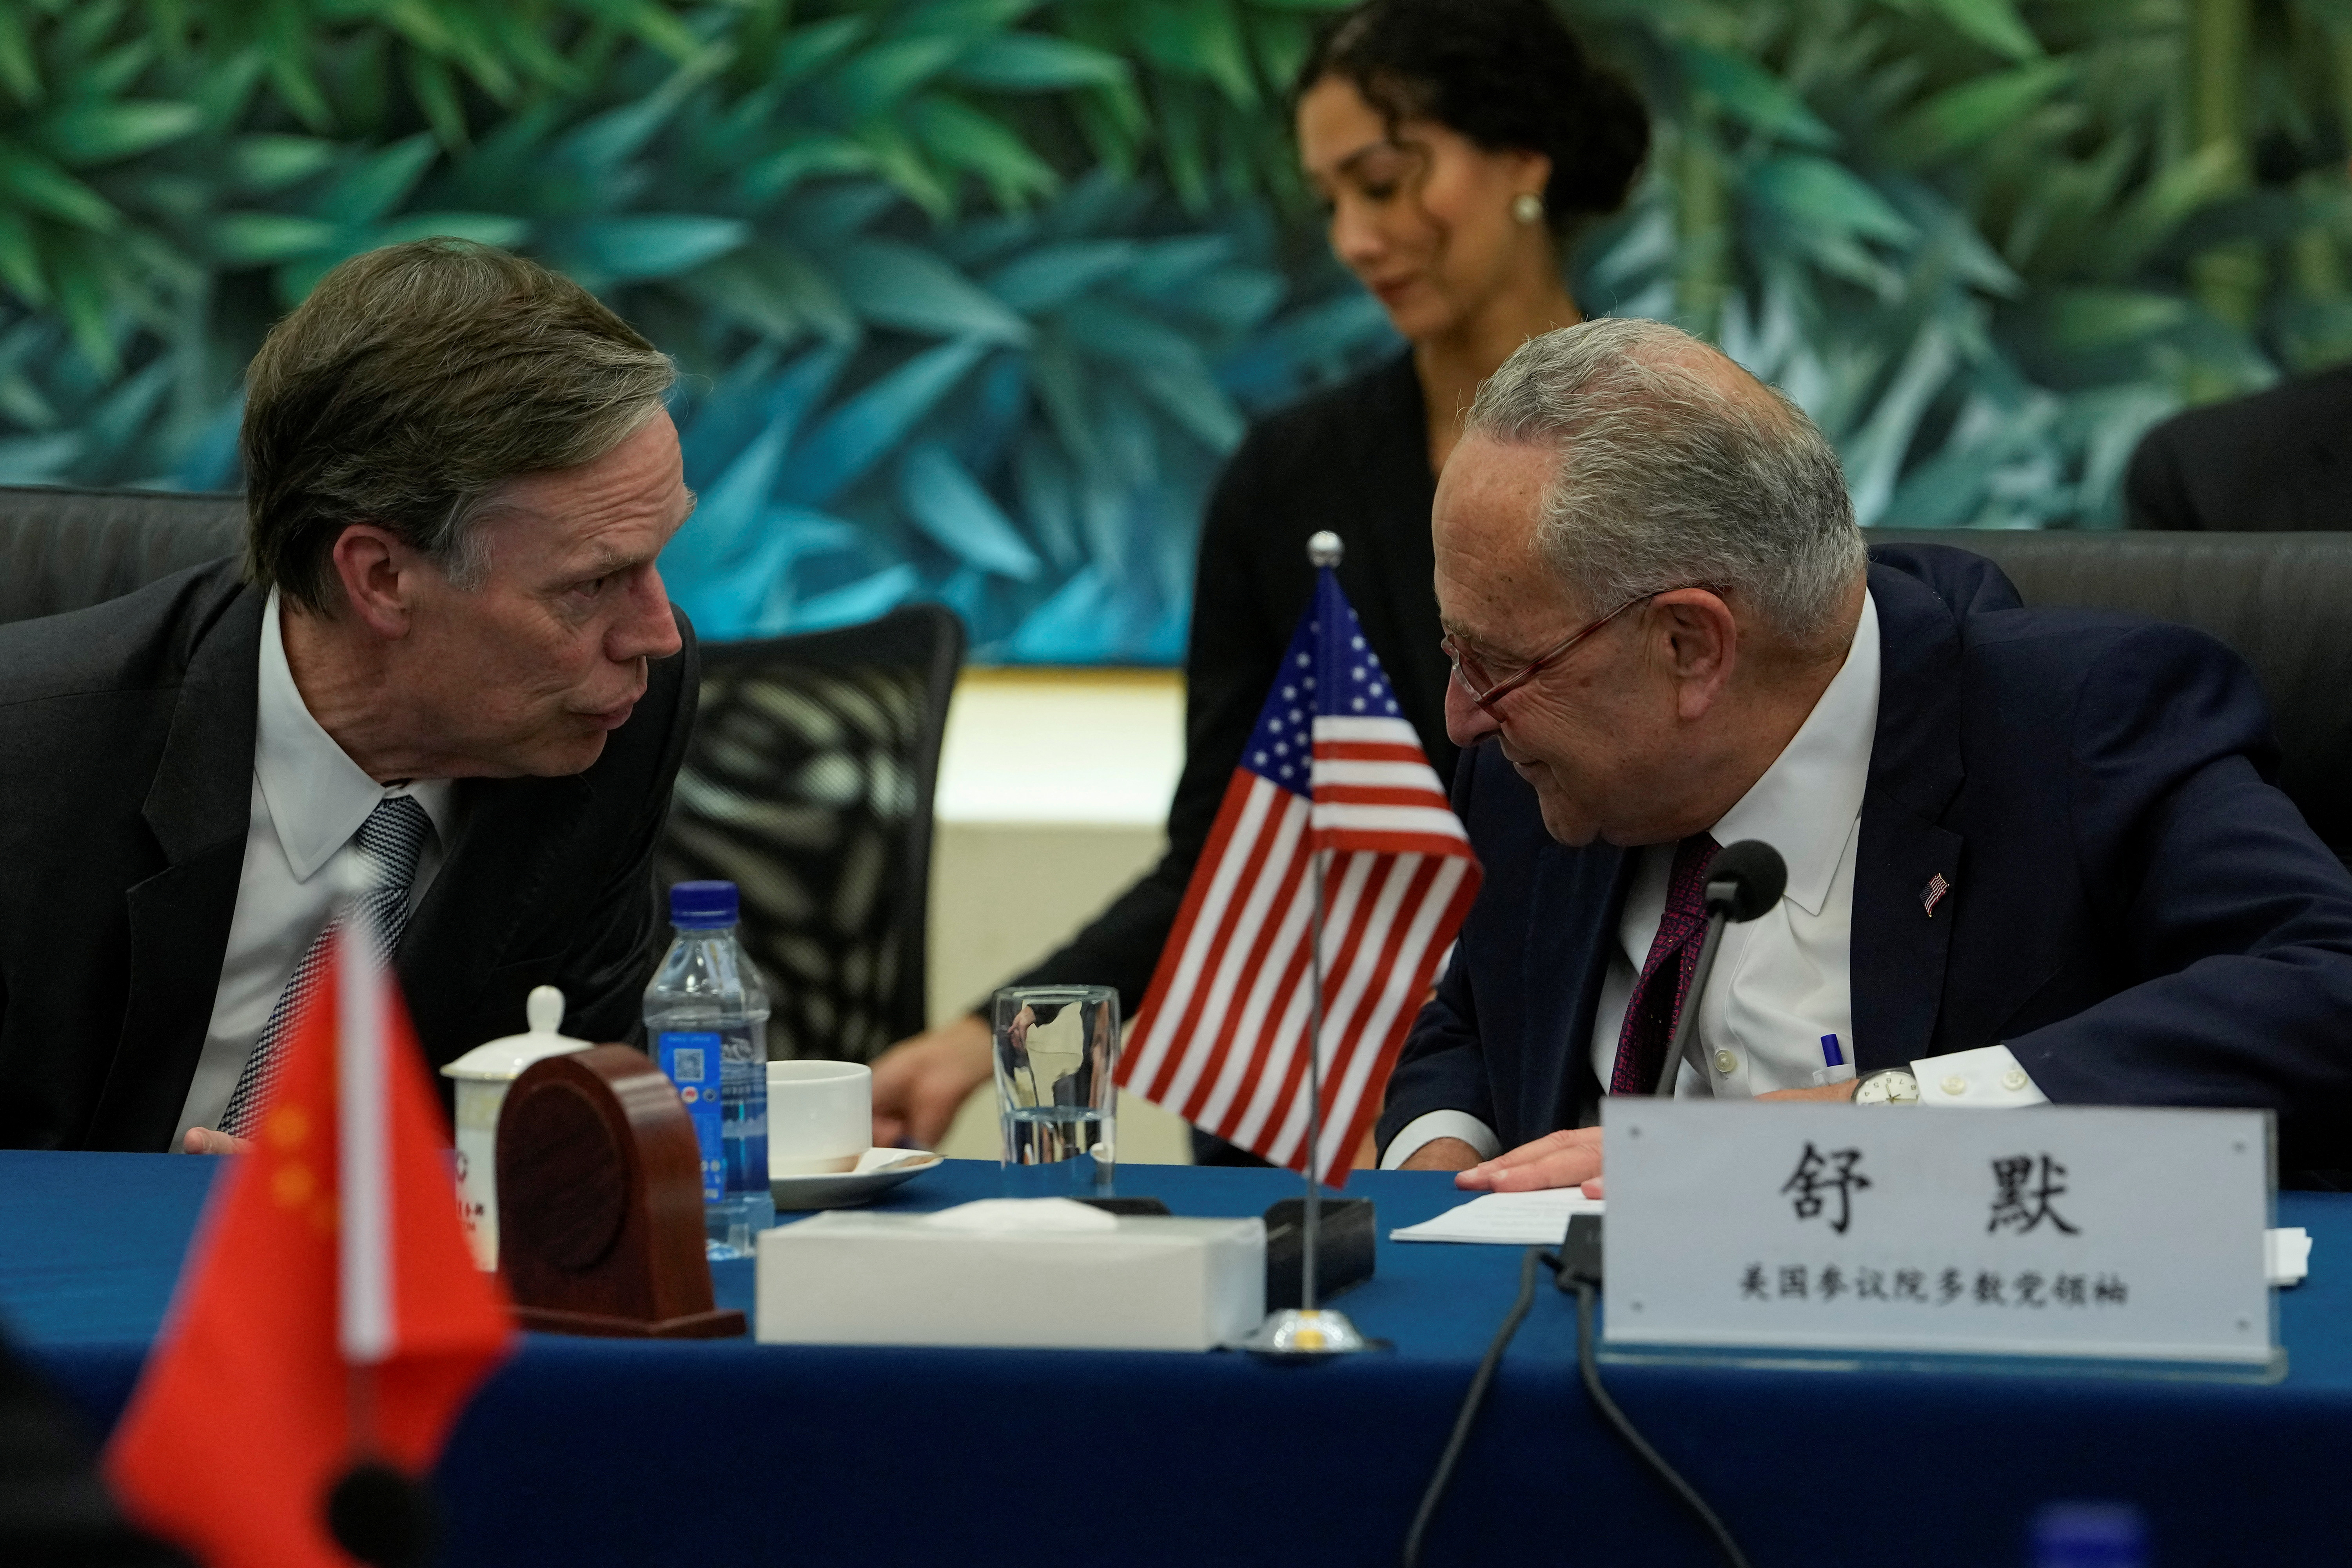 U.S. senators visit Beijing